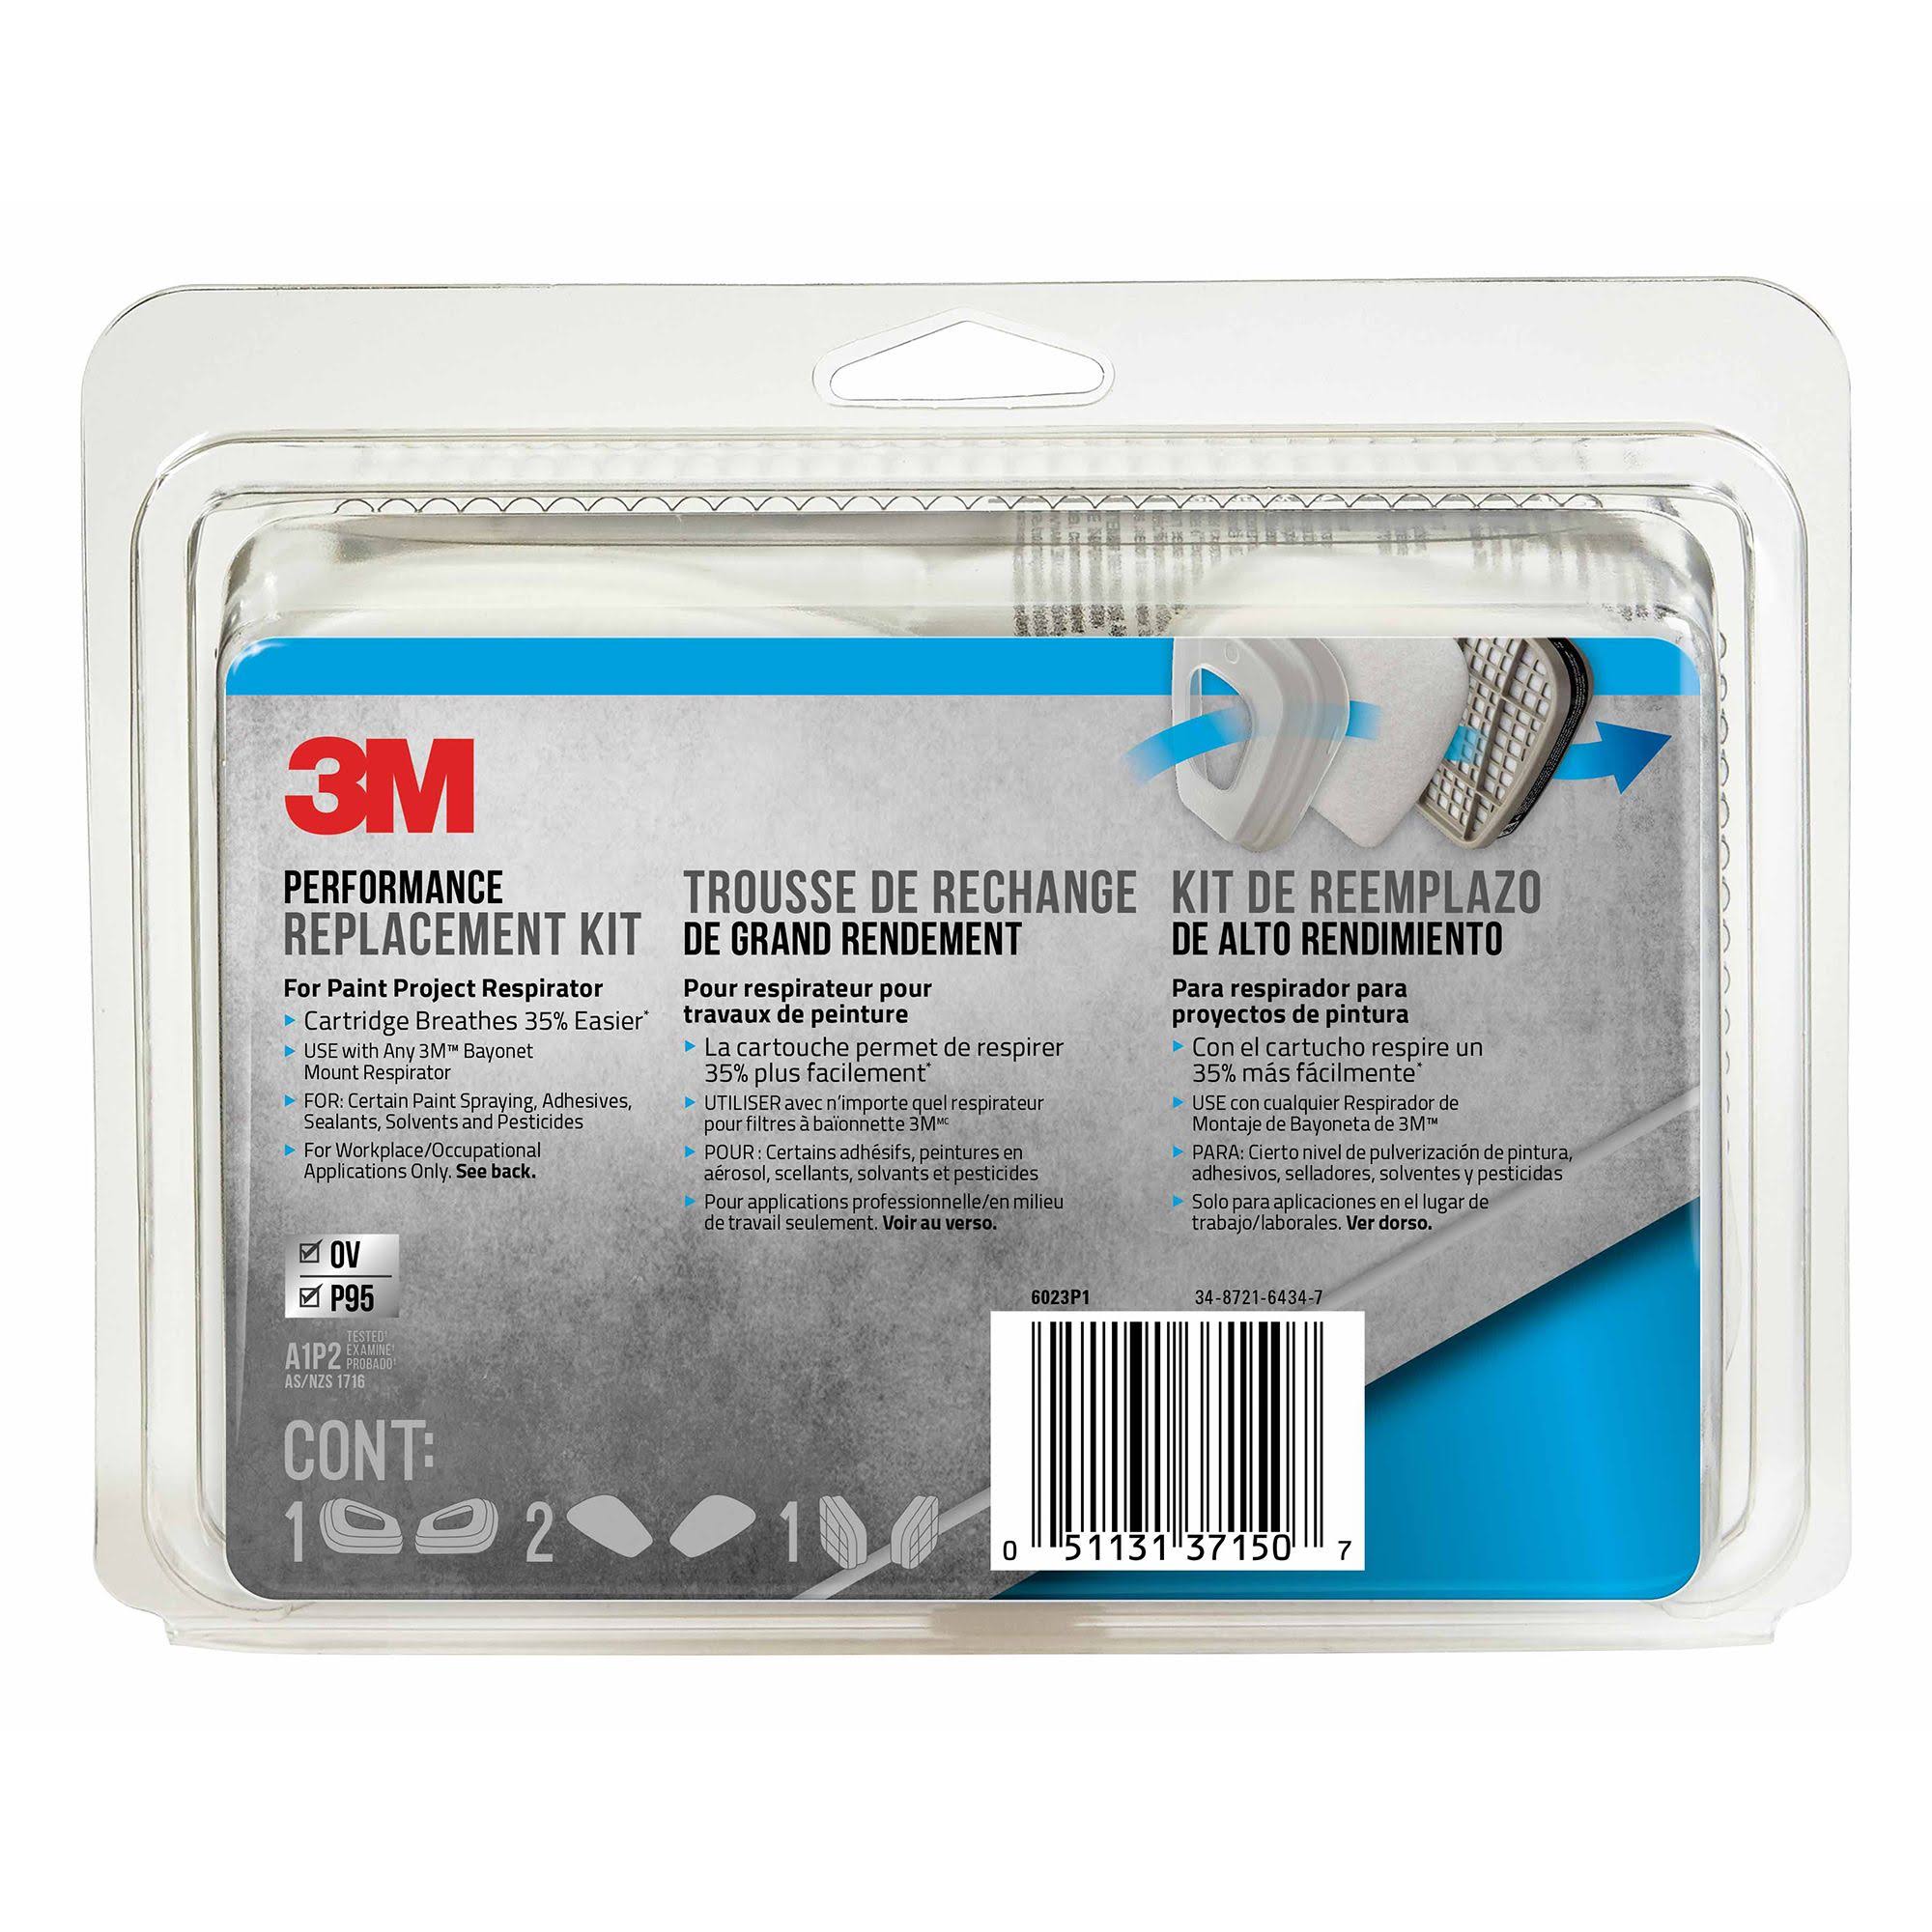 3M Paint Respirator Supply Kit